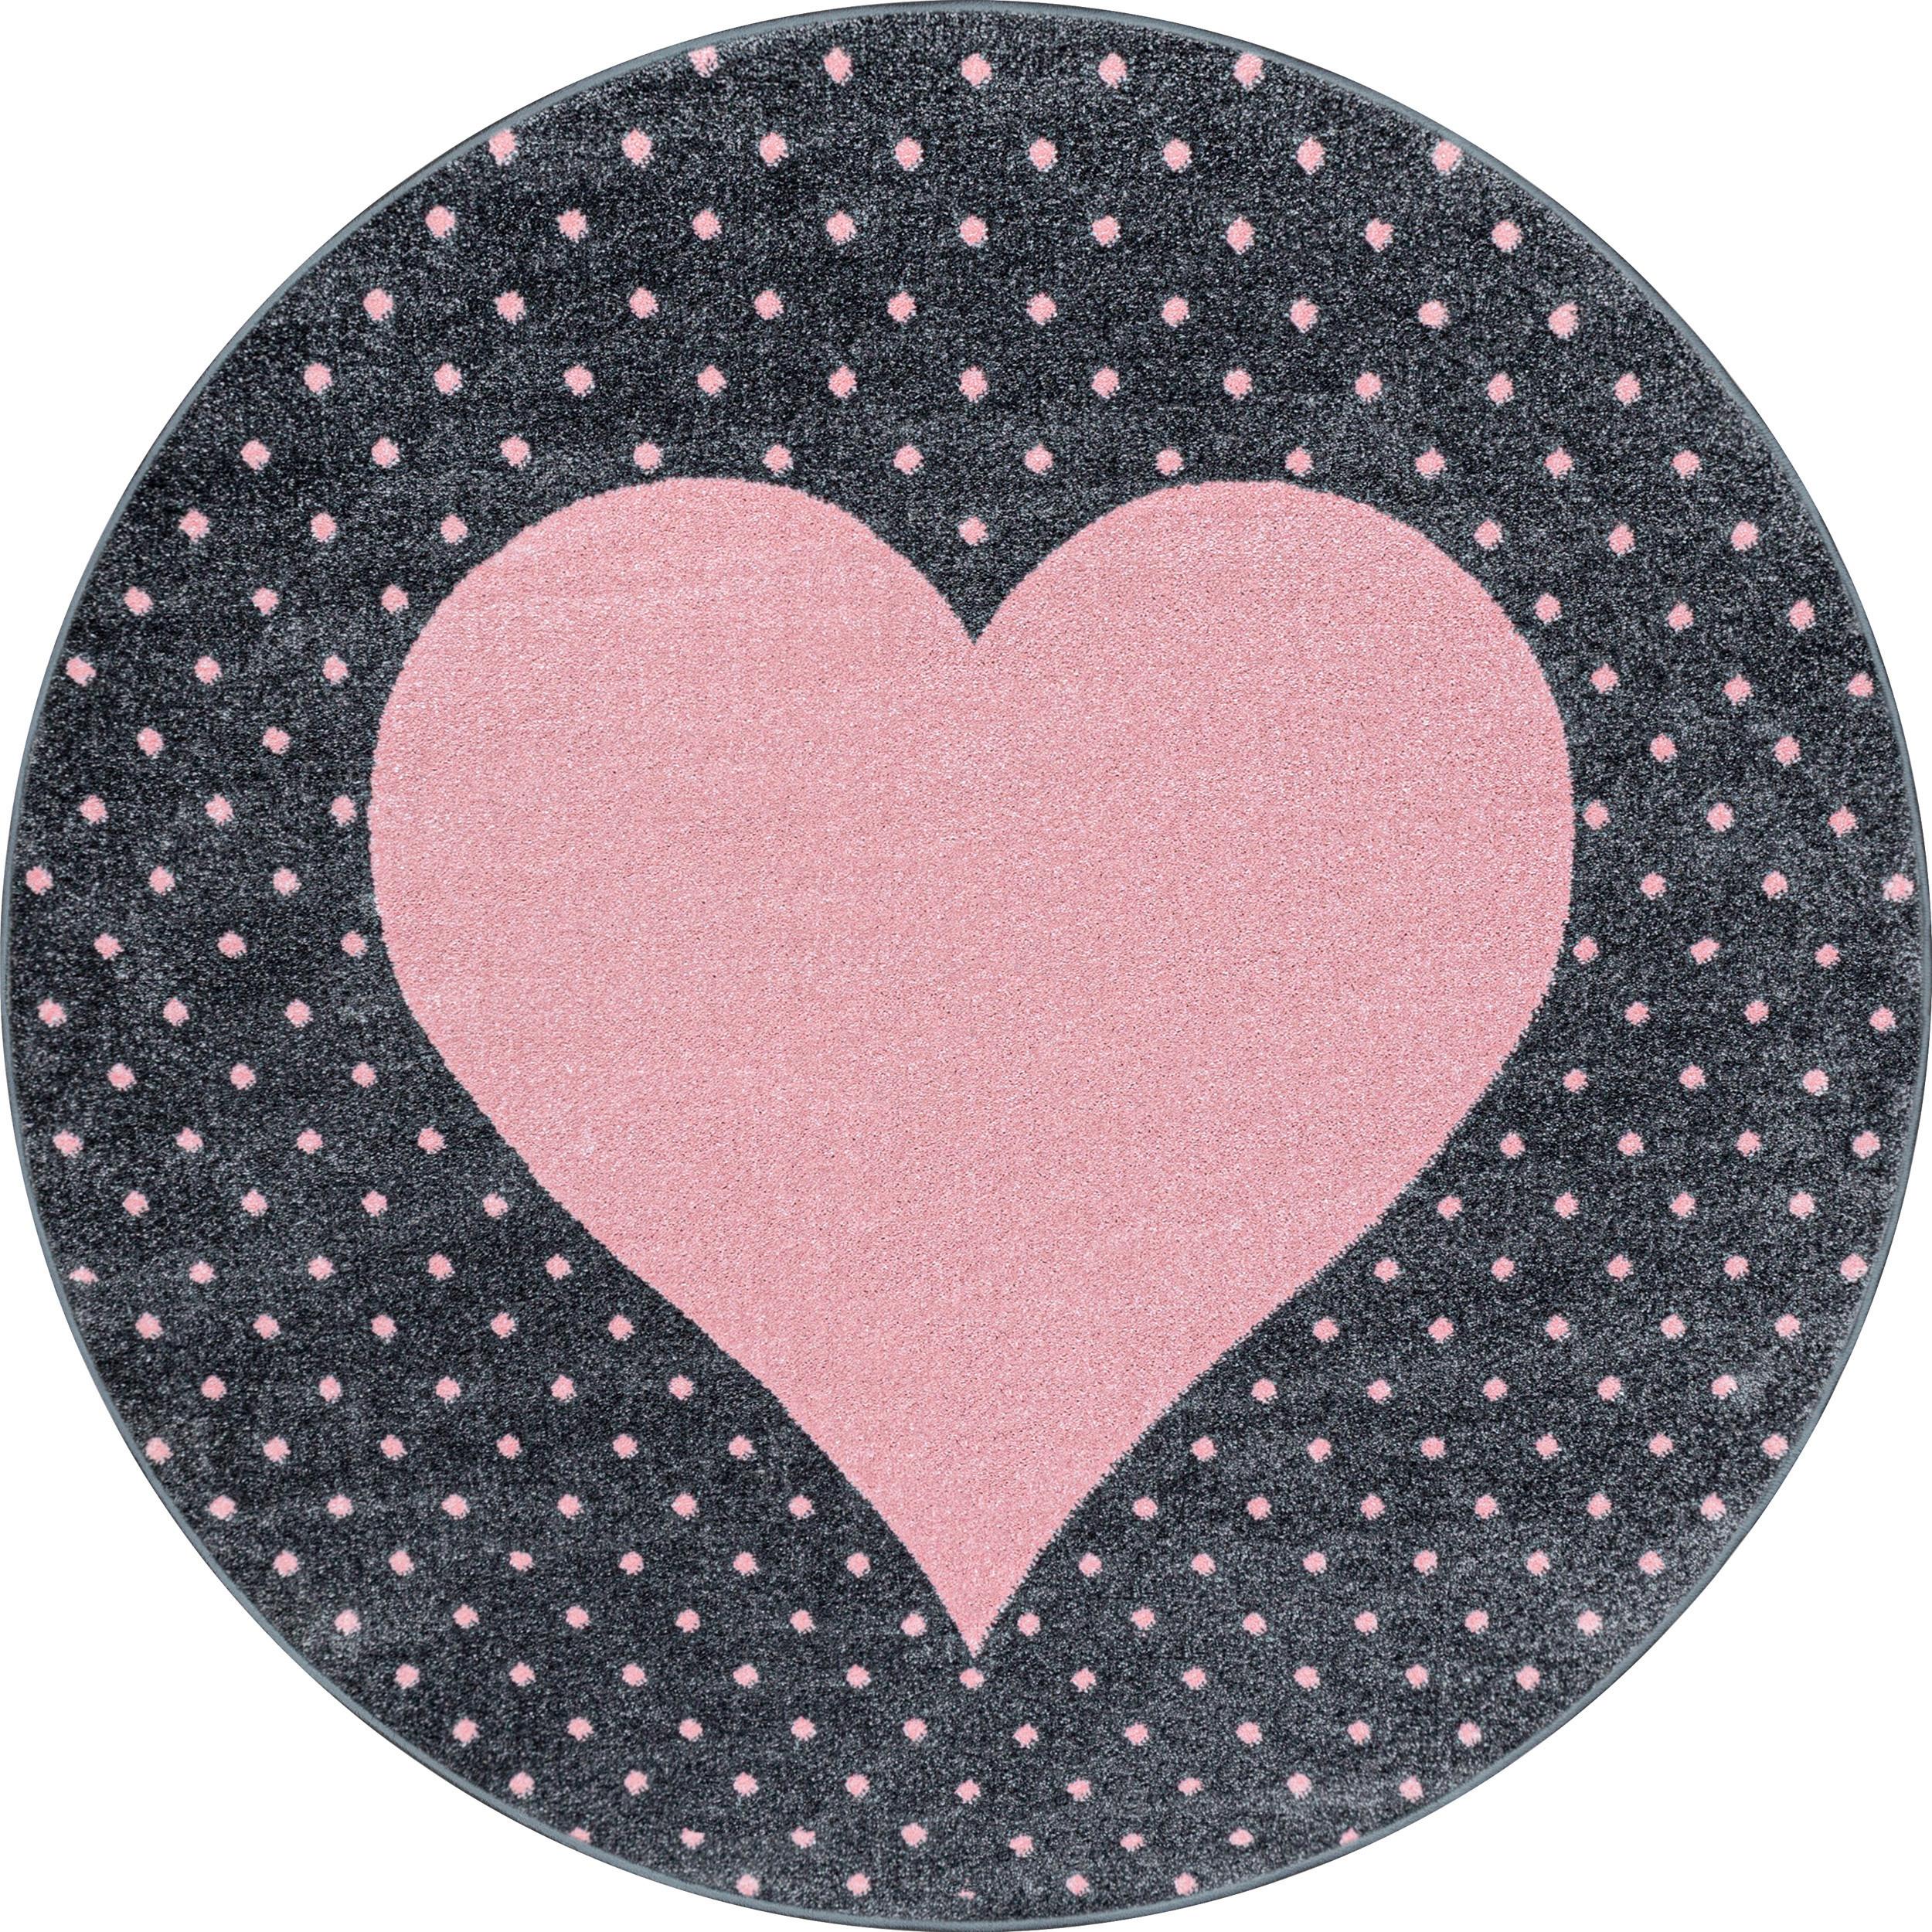 Dětský Koberec Srdce 160cm - pink, Trend, textil (160cm) - Ben'n'jen